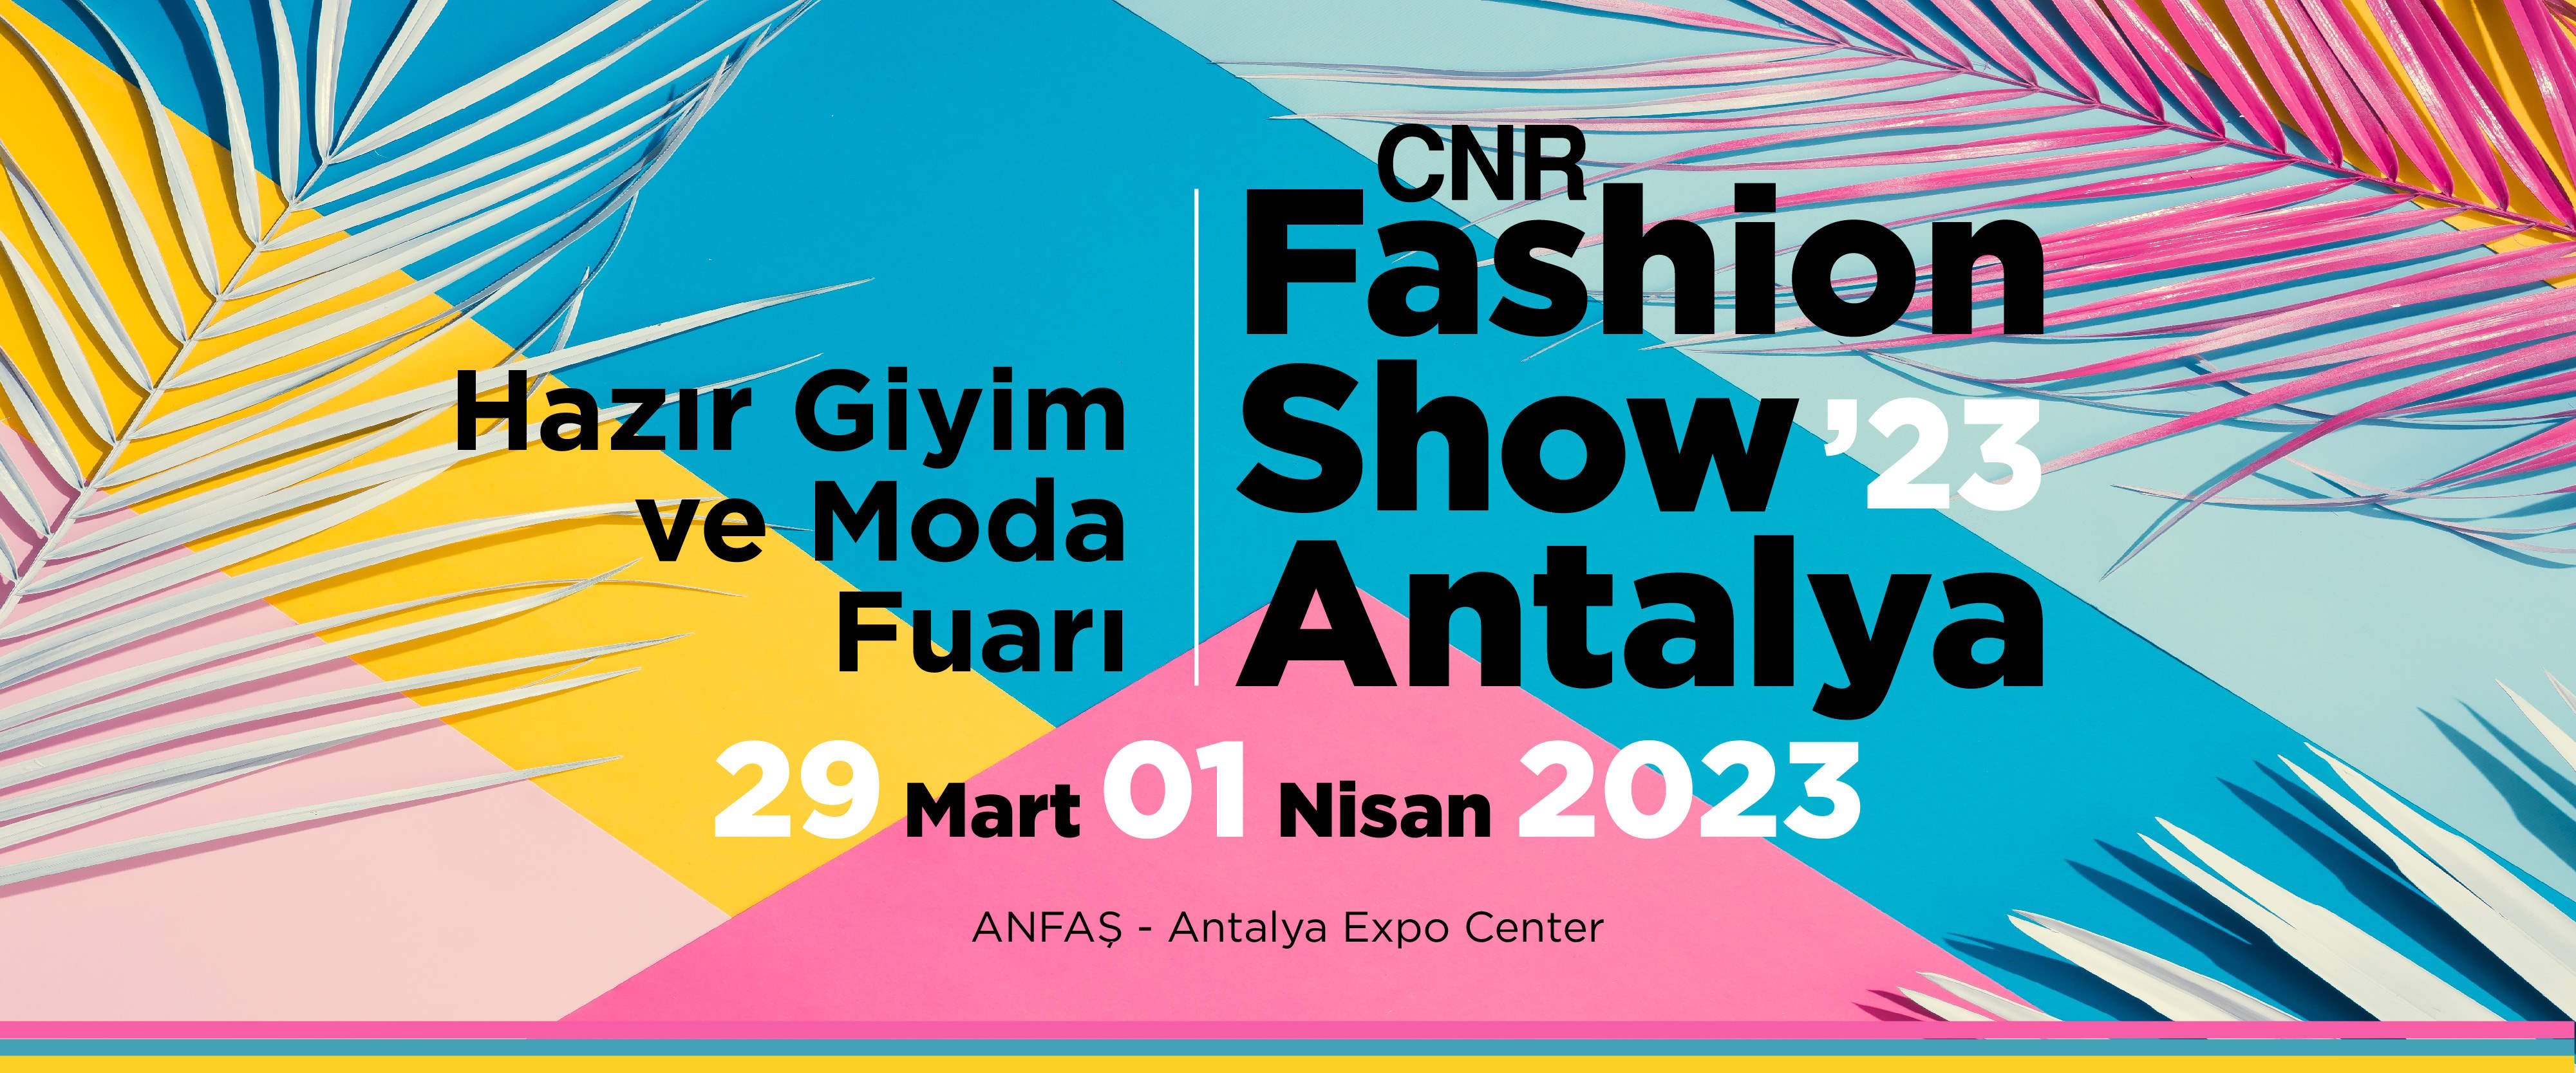 CNR Fashion Show - Slayt Görseli